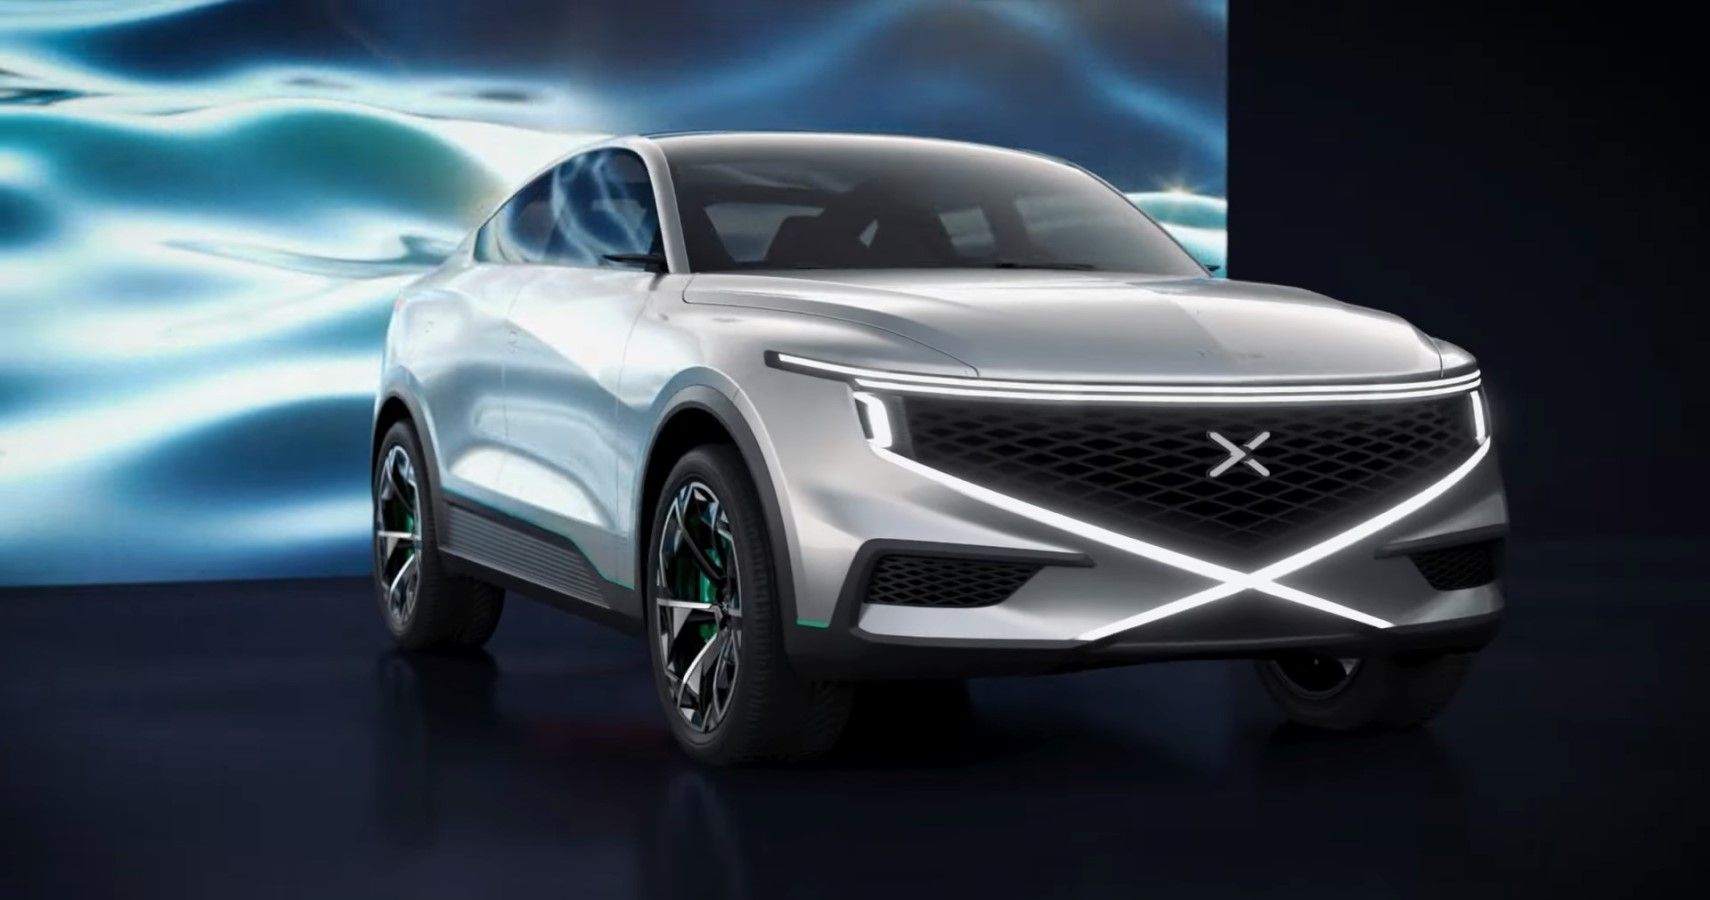 The Pininfarina-Designed NamX HUV Is A Sleek Hydrogen-Powered Crossover